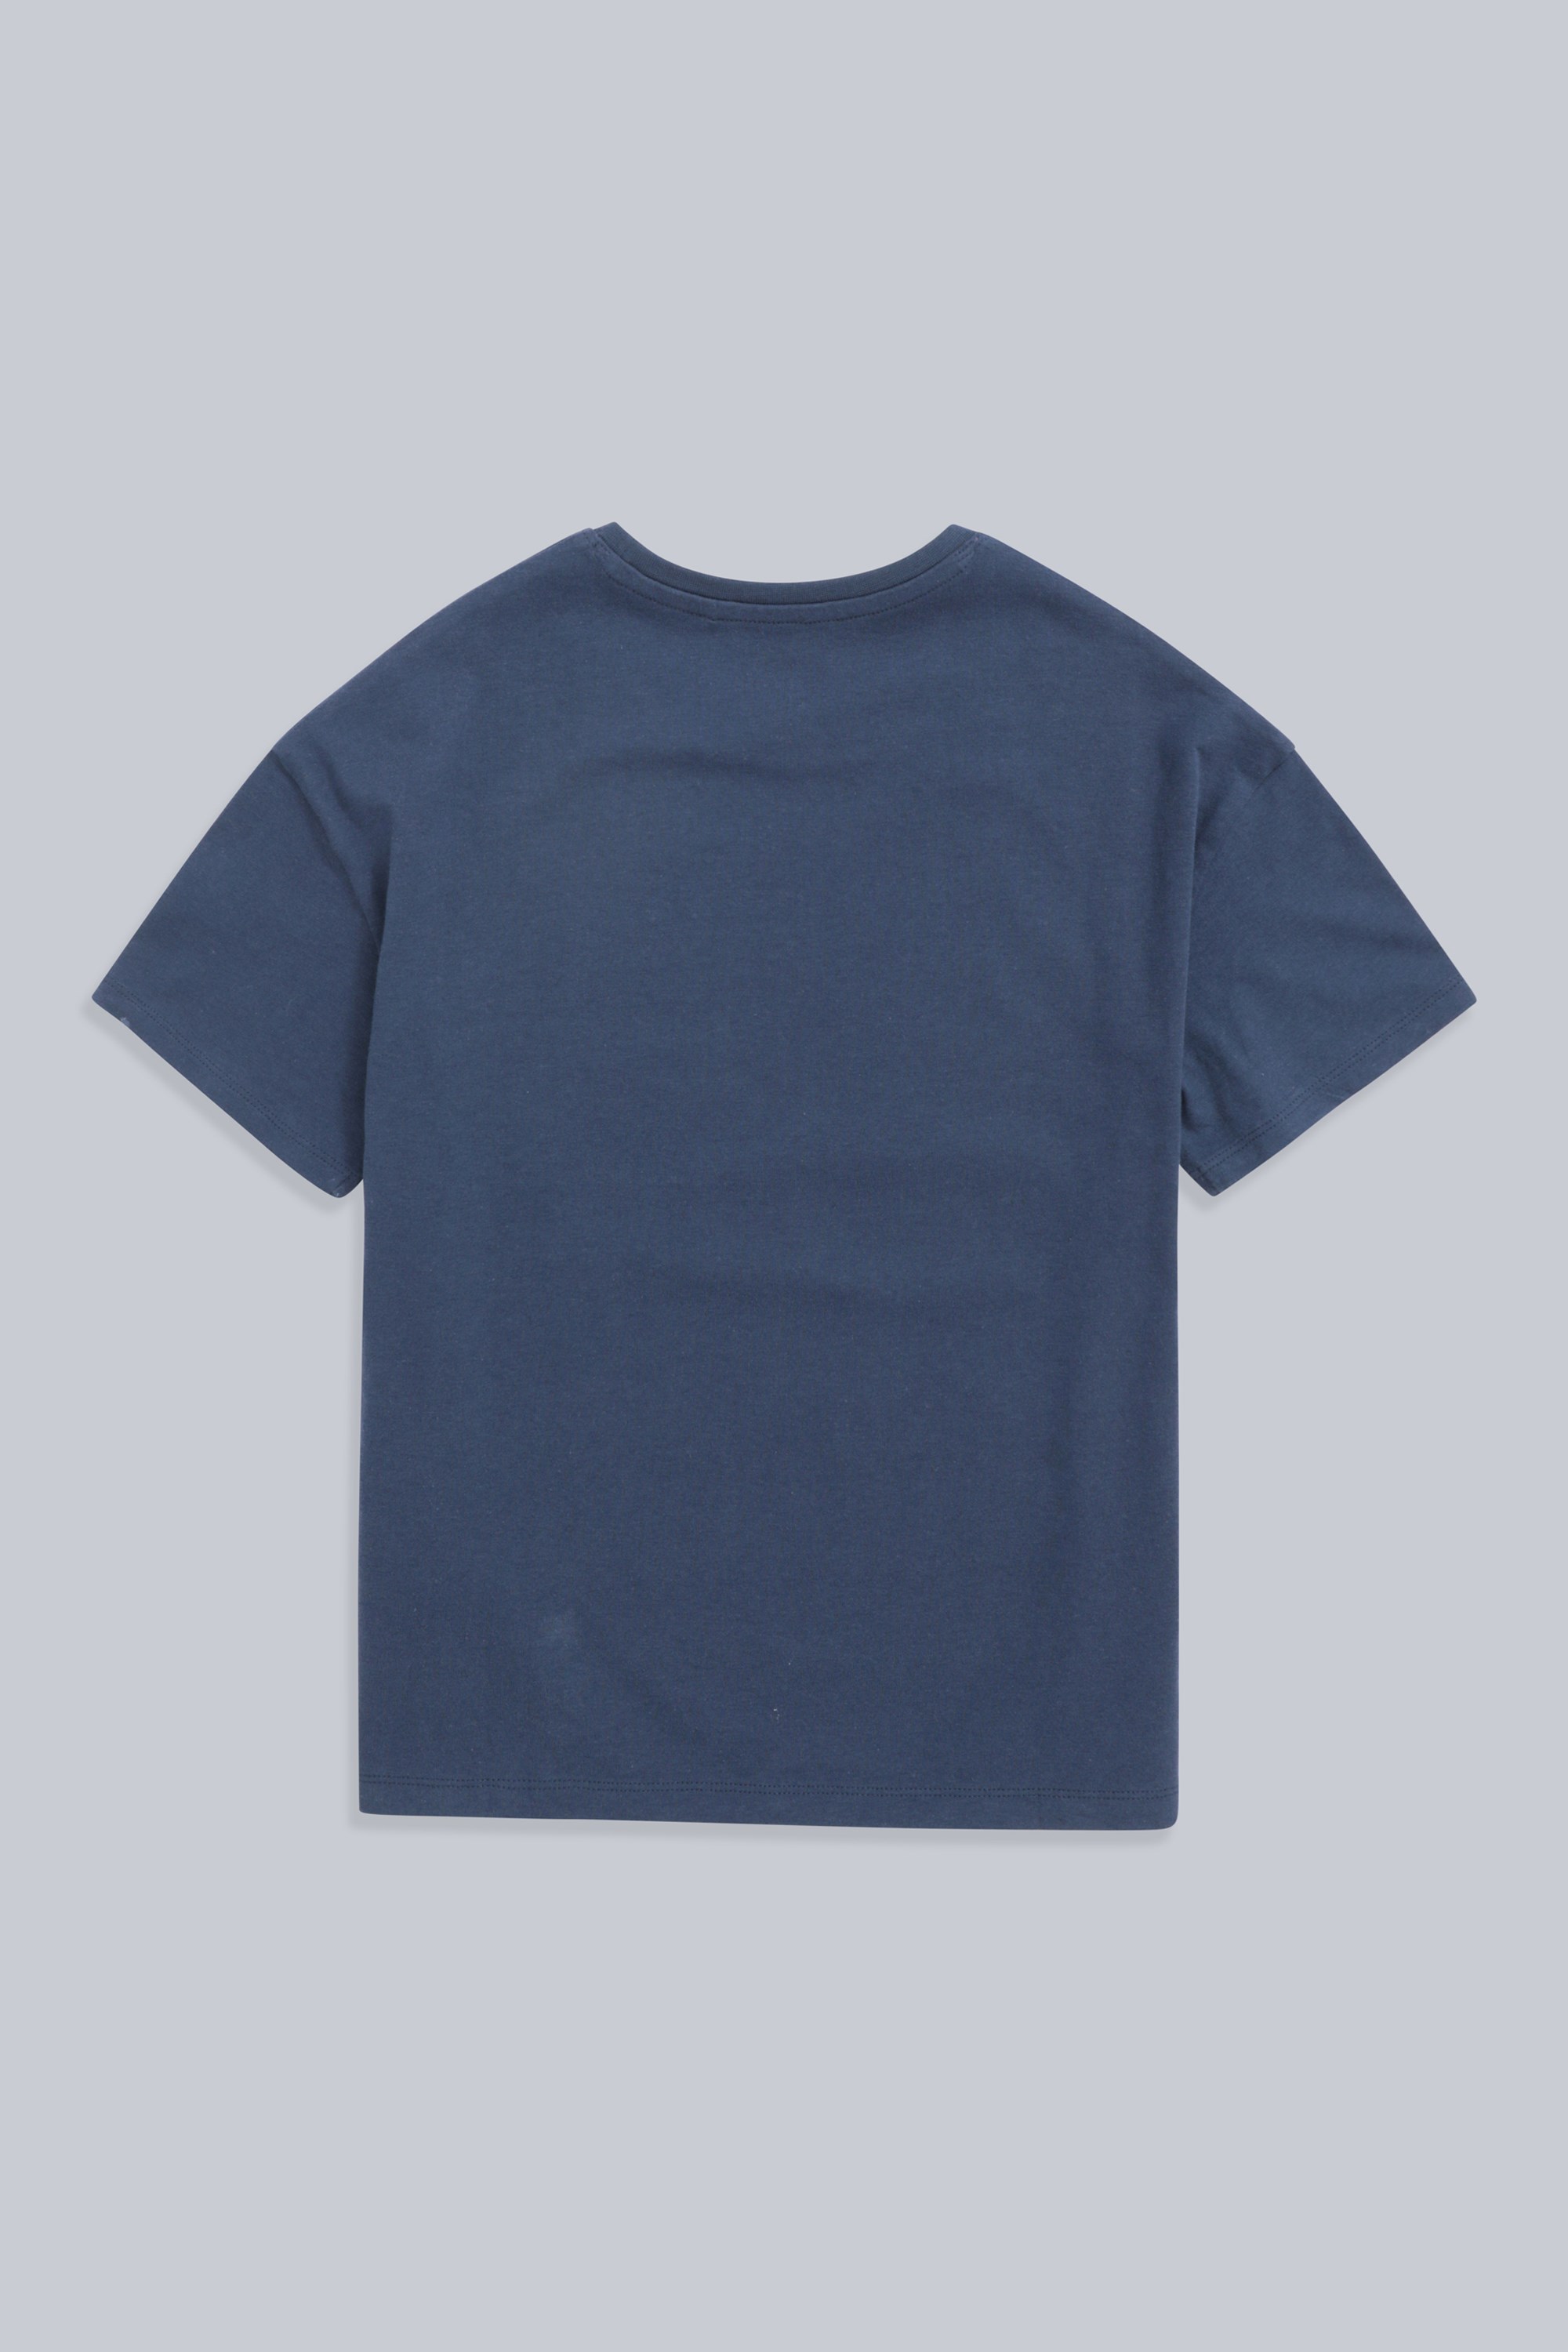 Mountain Warehouse Boys T-Shirts X 2-7-8yrs 